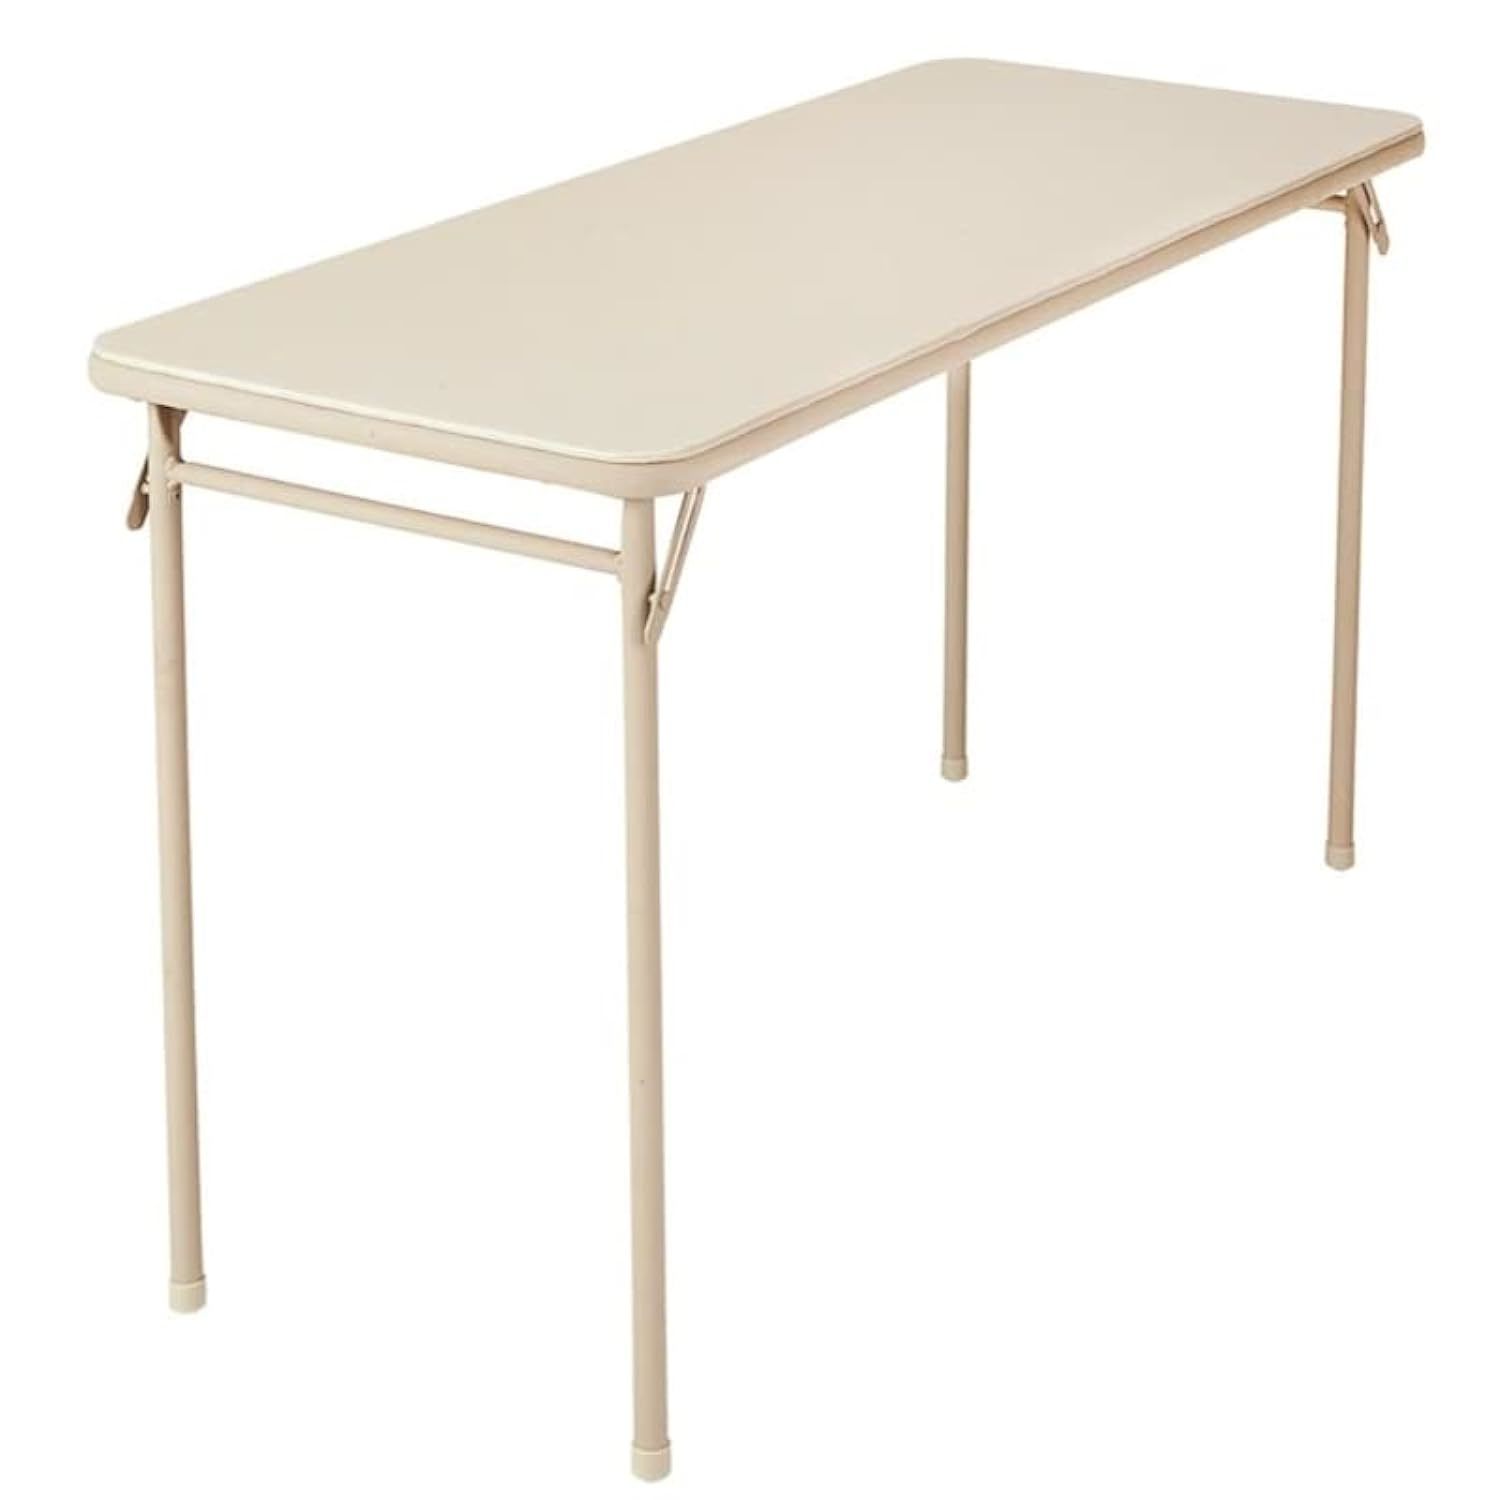 Cosco Folding Serving Table, 20" X 48", Antique Linen - $87.99